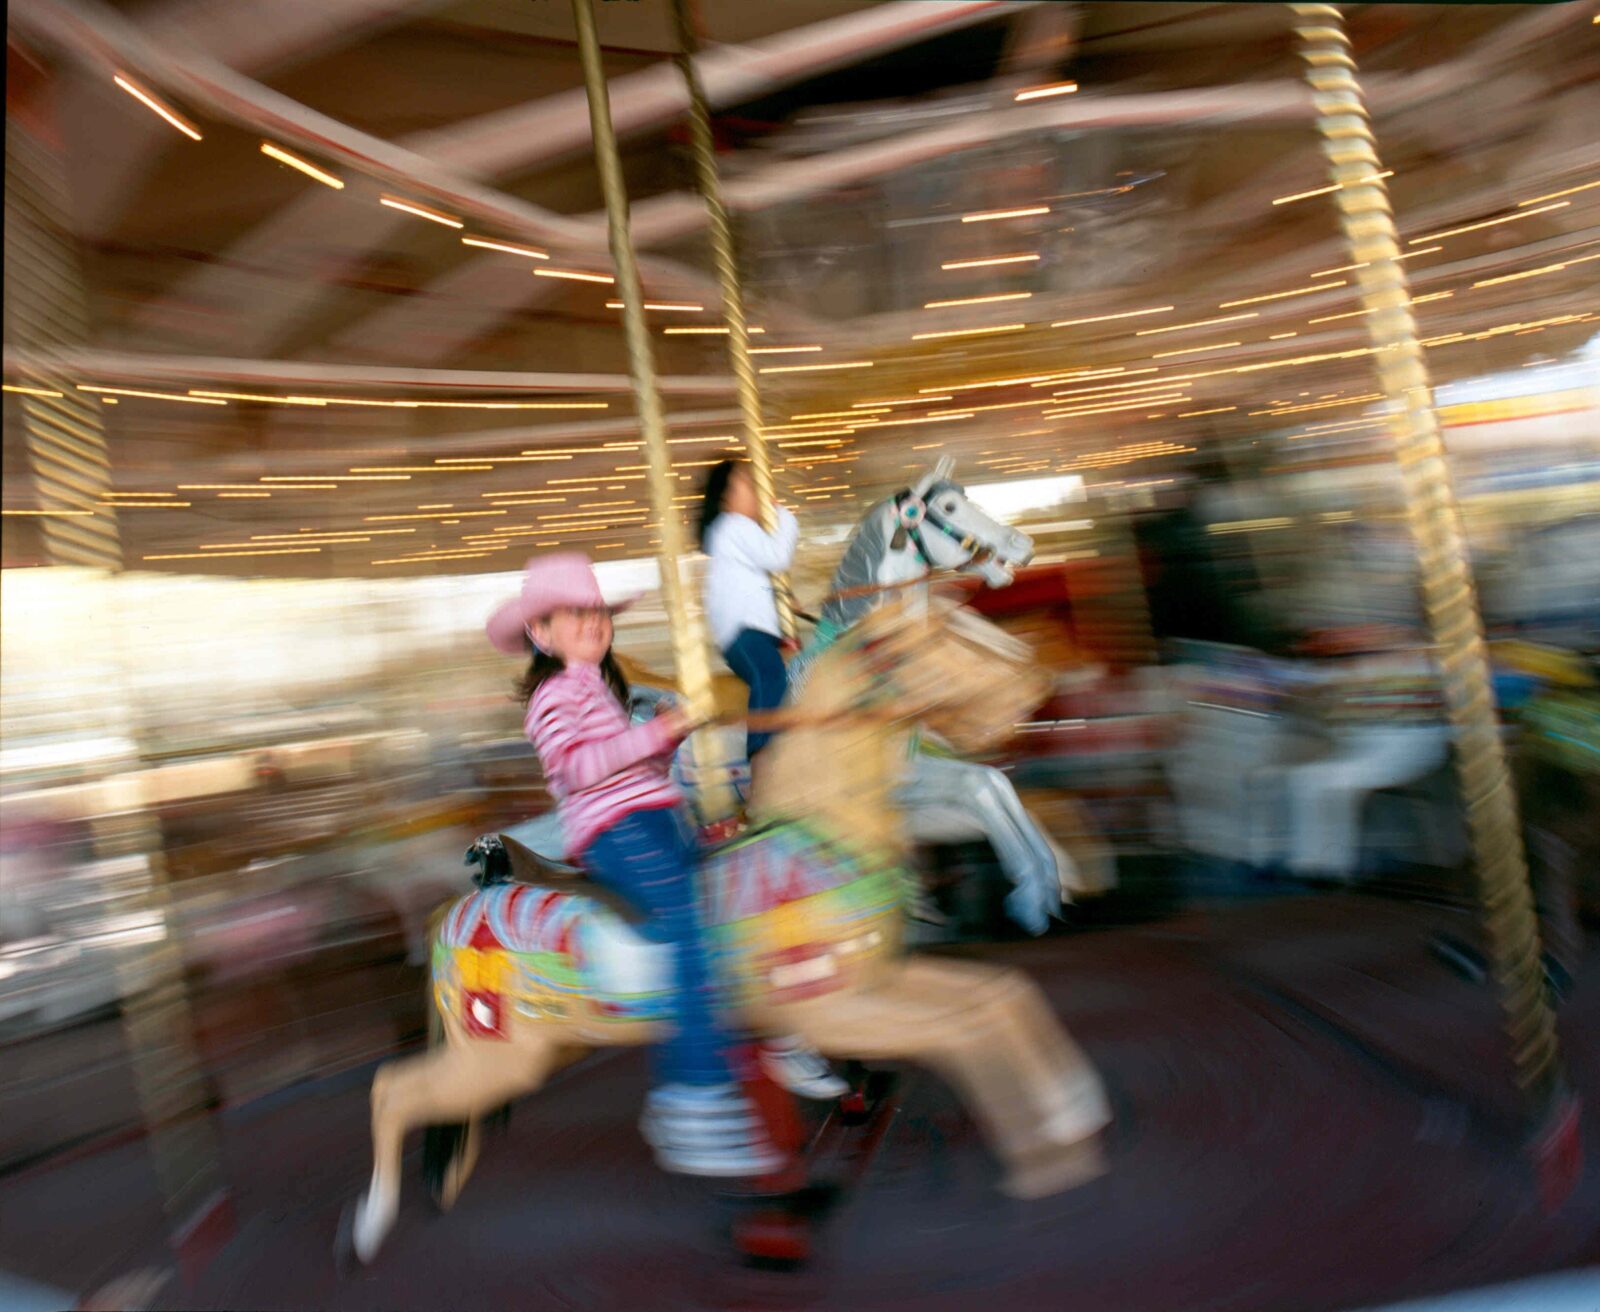 Riding the merry-go-round